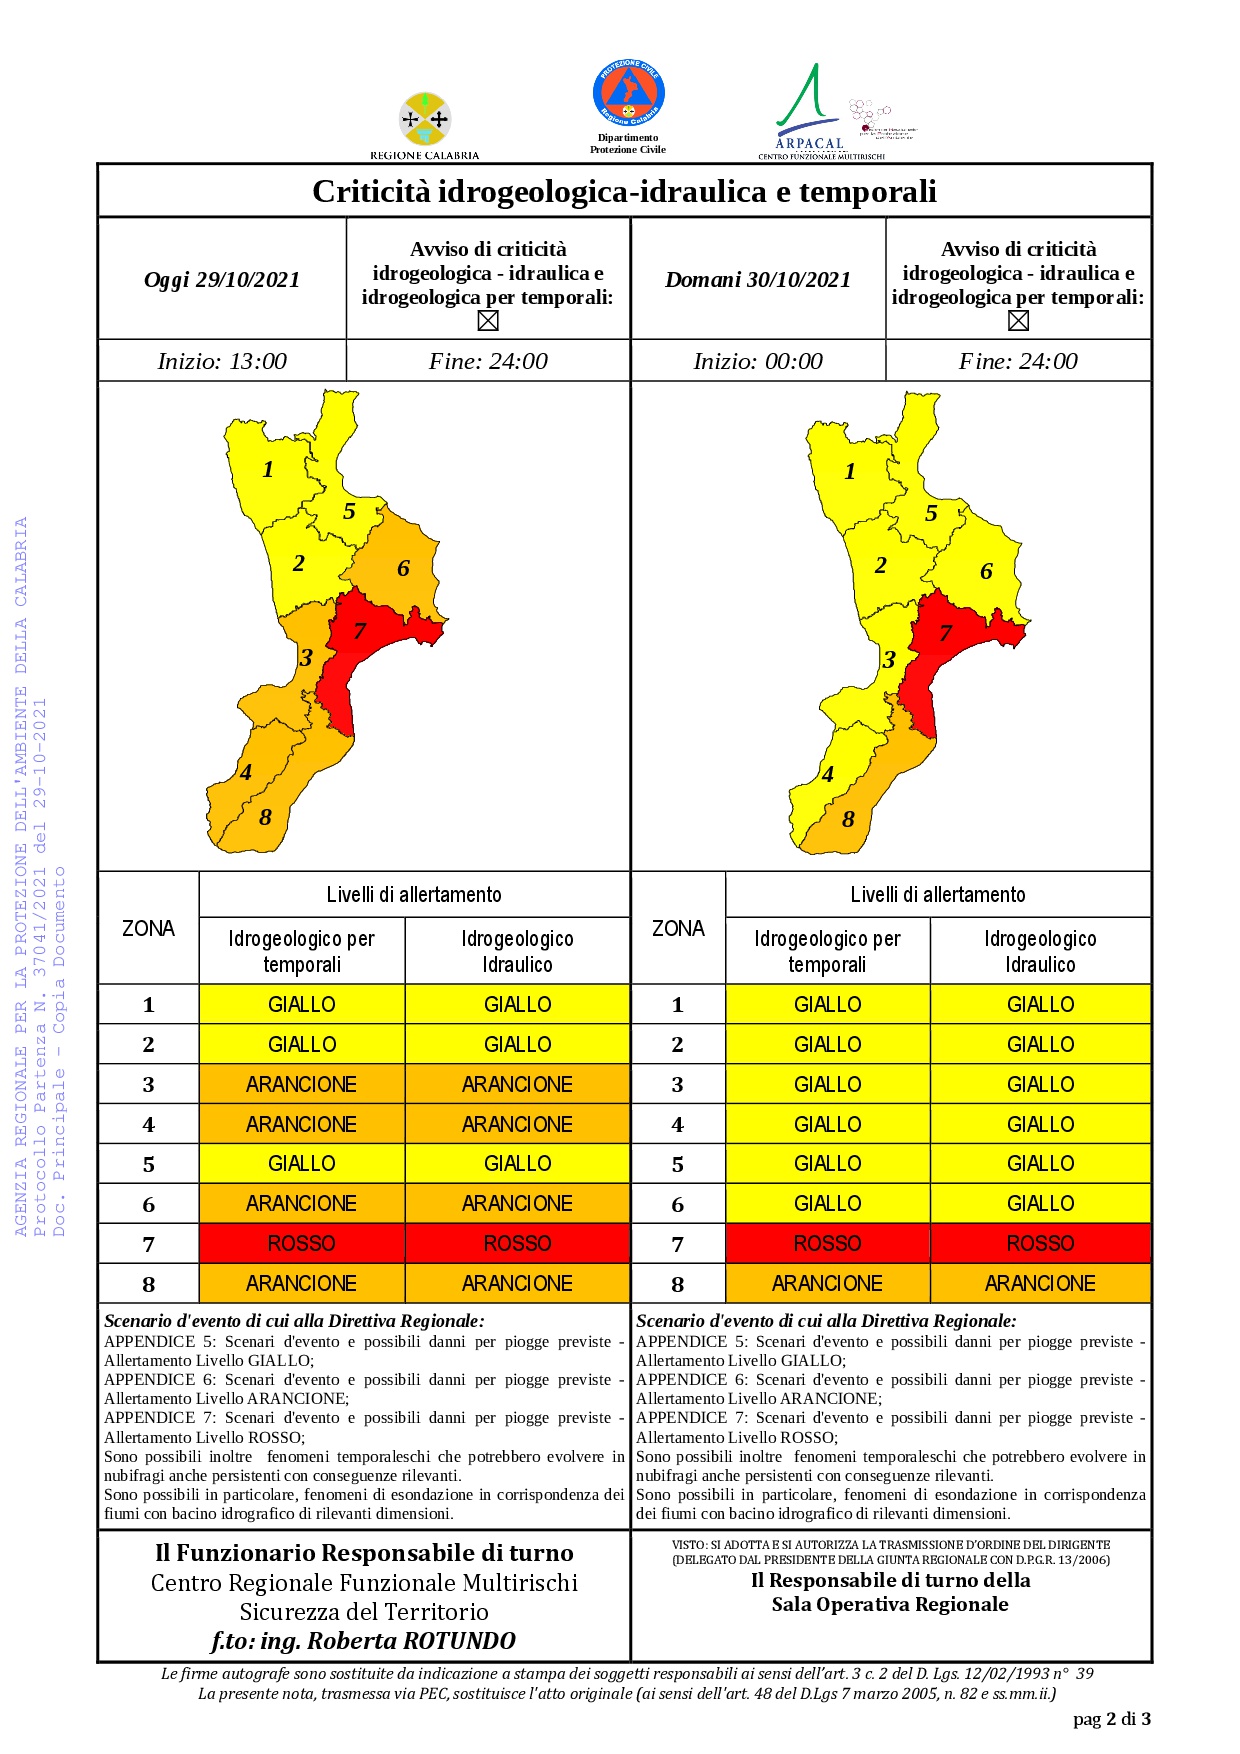 Criticità idrogeologica-idraulica e temporali in Calabria 29-10-2021